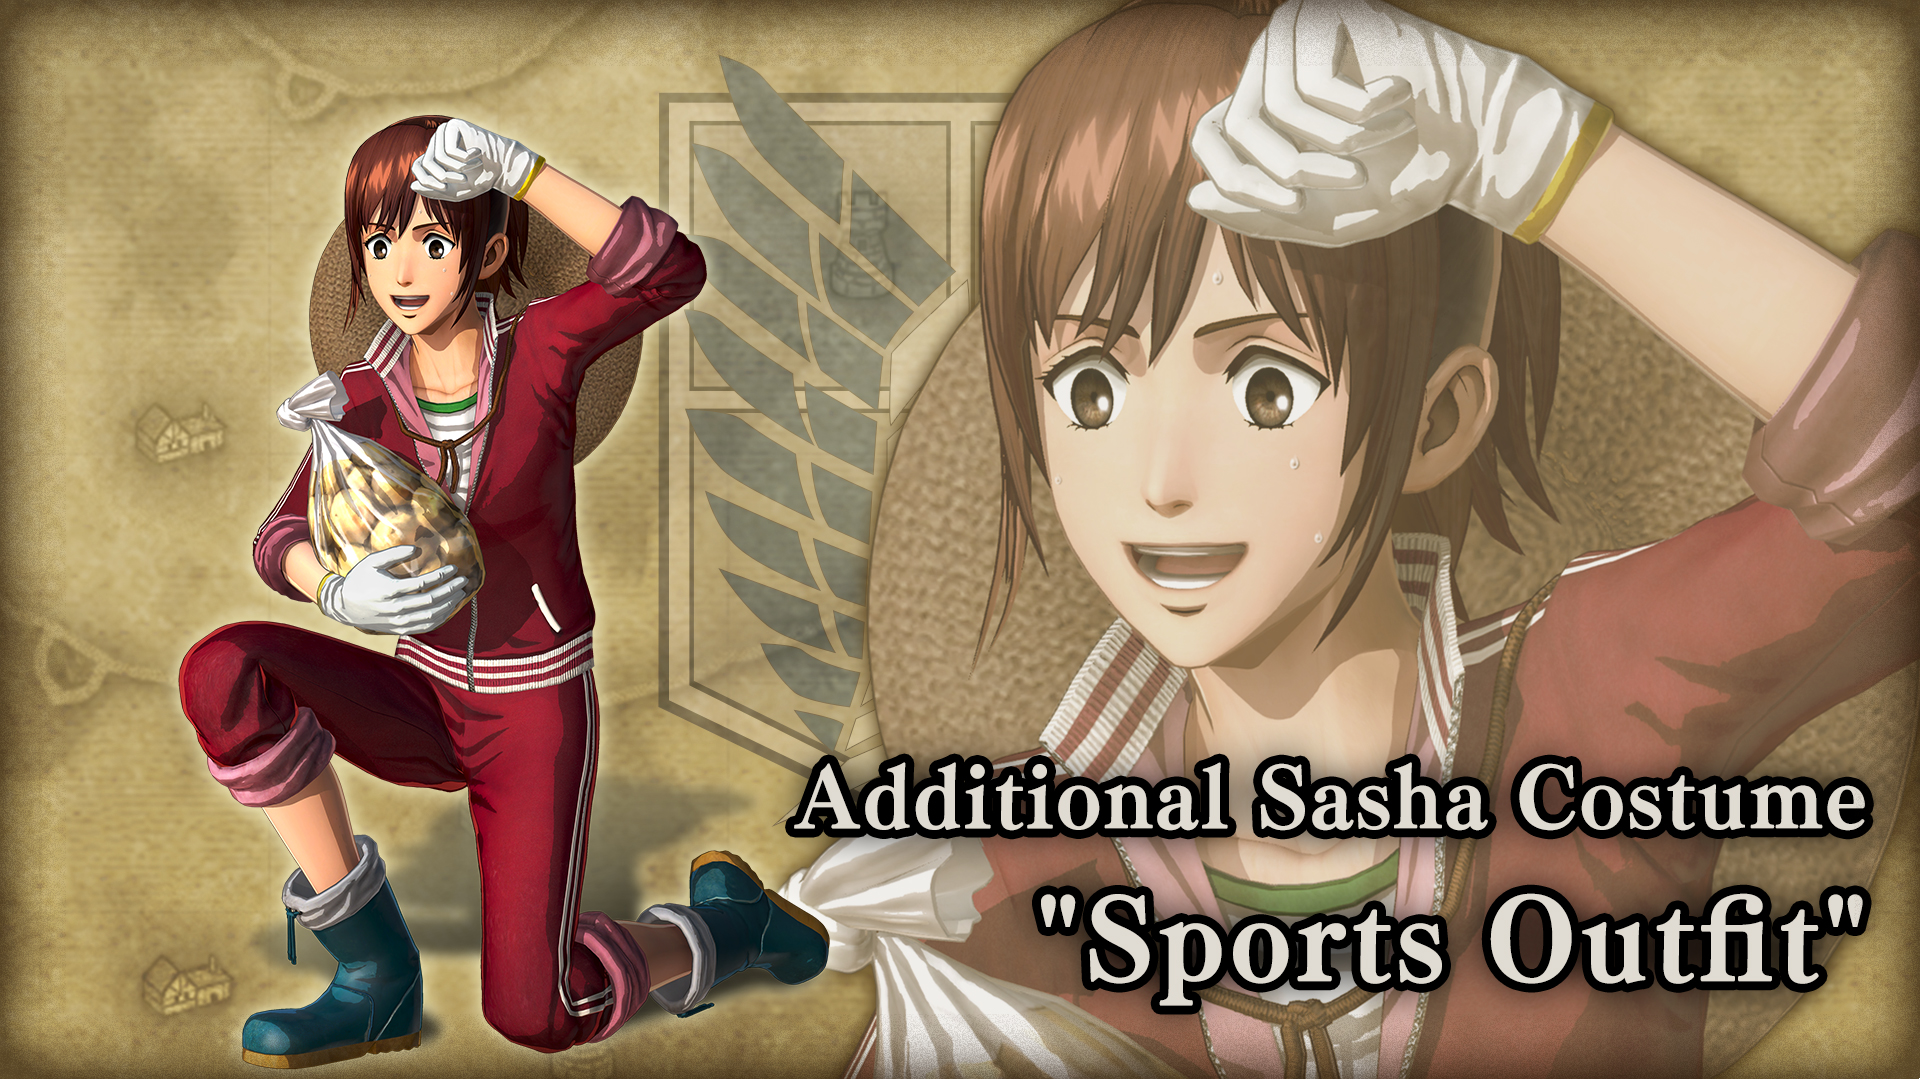 Additional Sasha Costume: "Sports Outfit"